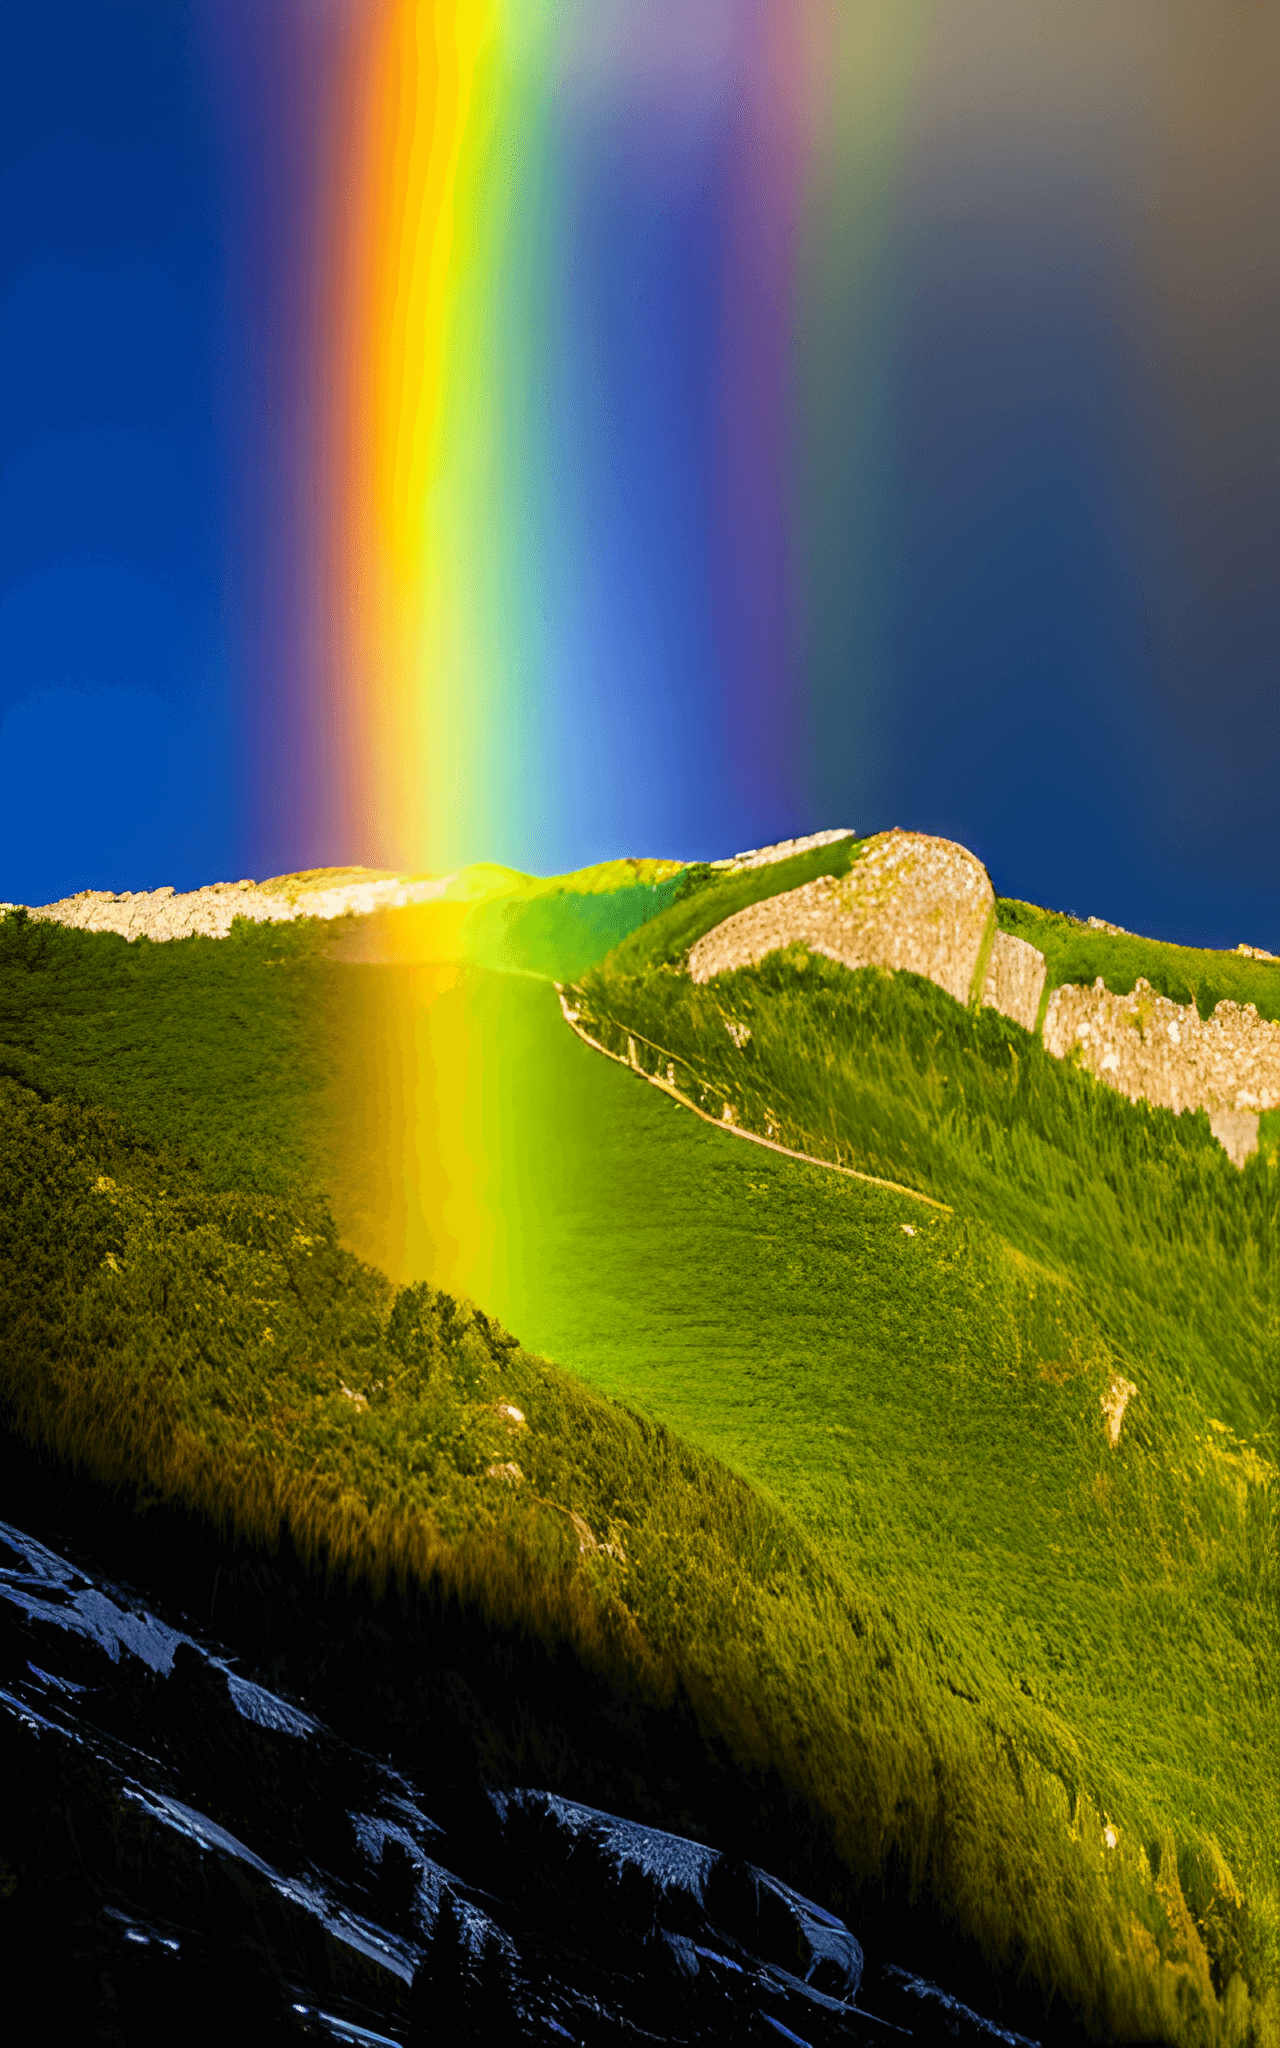 A rainbow over a lush green hillside. - Rainbows